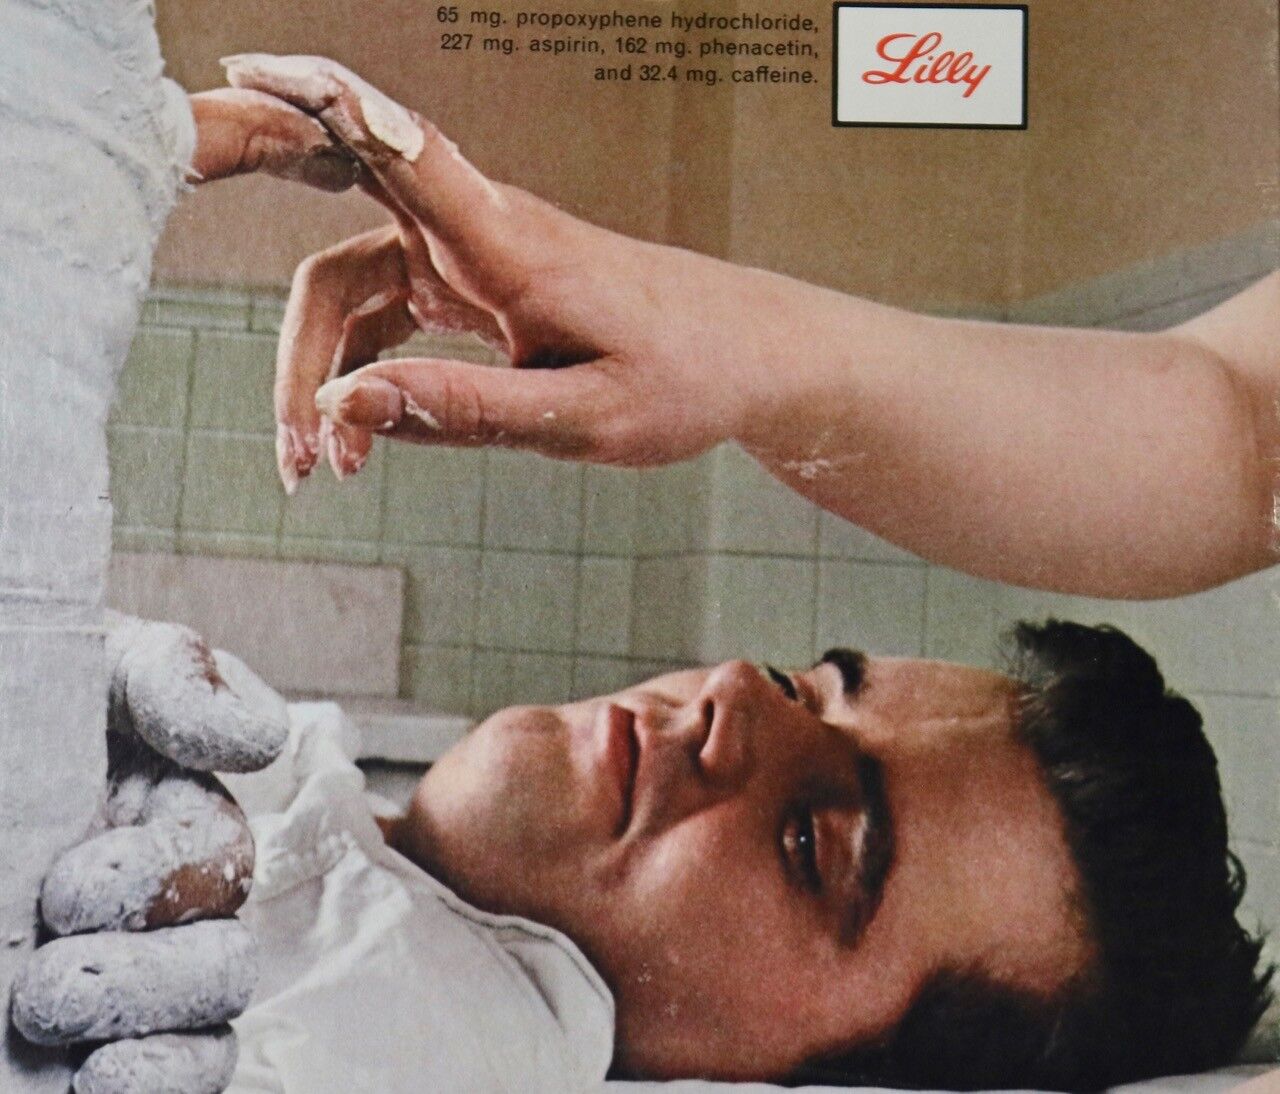 DARVON vintage 1970 Lilly propoxyphene emergency room poster board advertisement